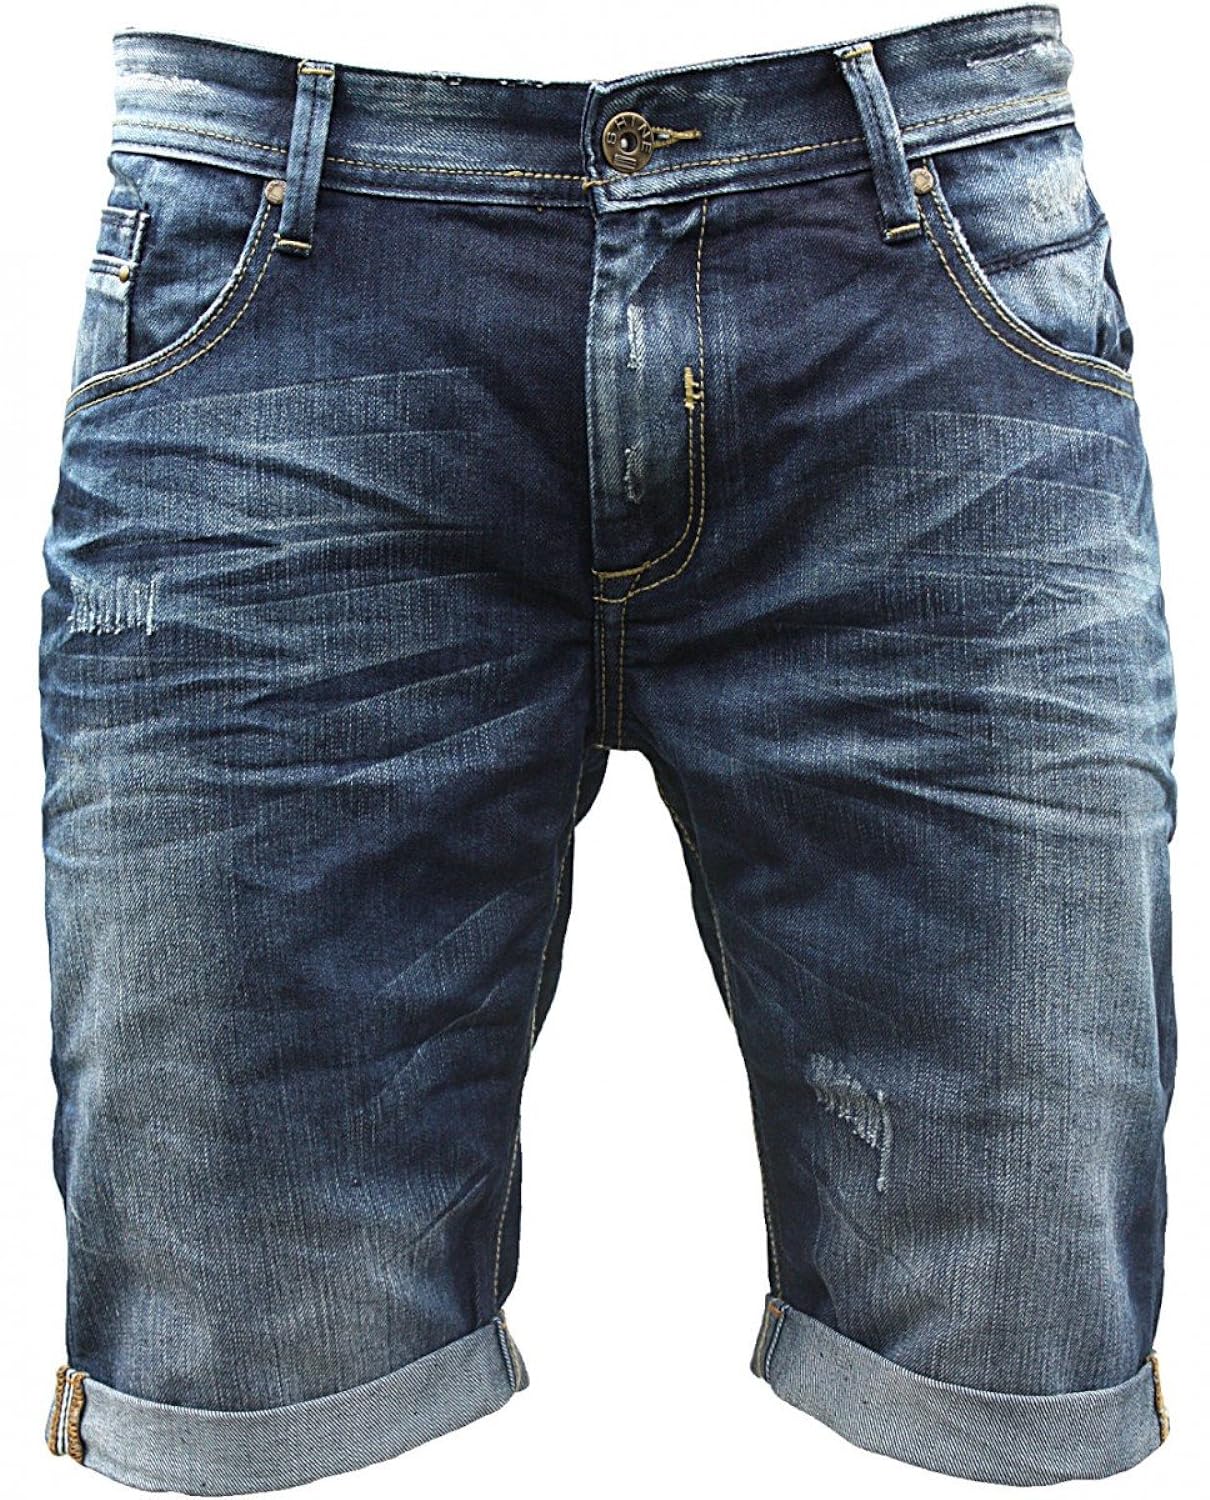 SHINE ORIGINAL Jeans Shorts 2-55011 Juicy